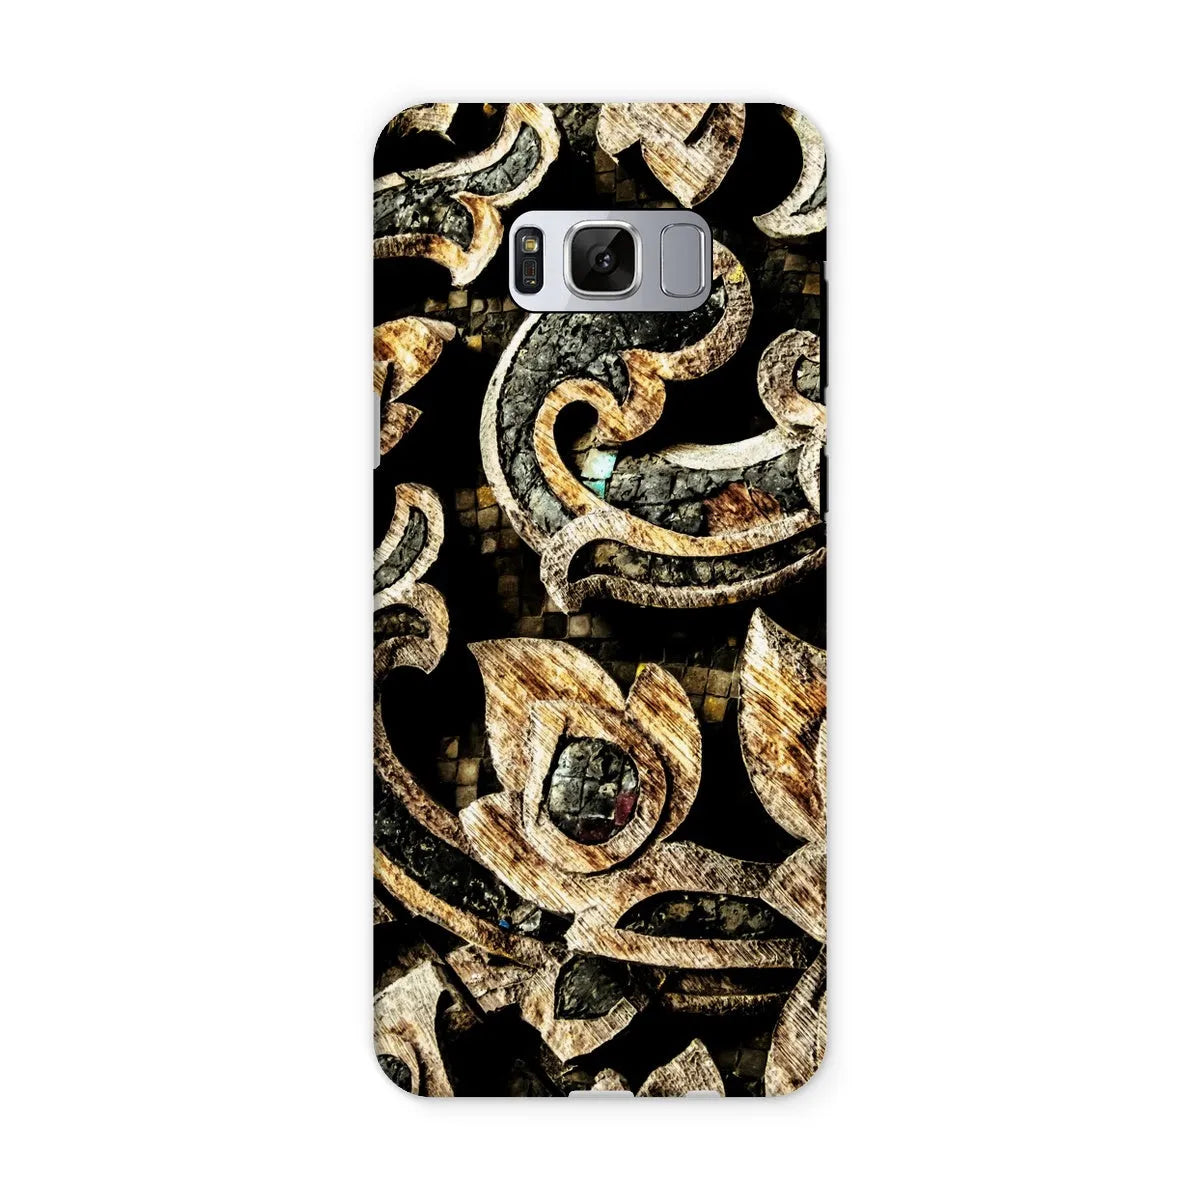 Against The Grain Tough Phone Case - Samsung Galaxy S8 / Matte - Mobile Phone Cases - Aesthetic Art